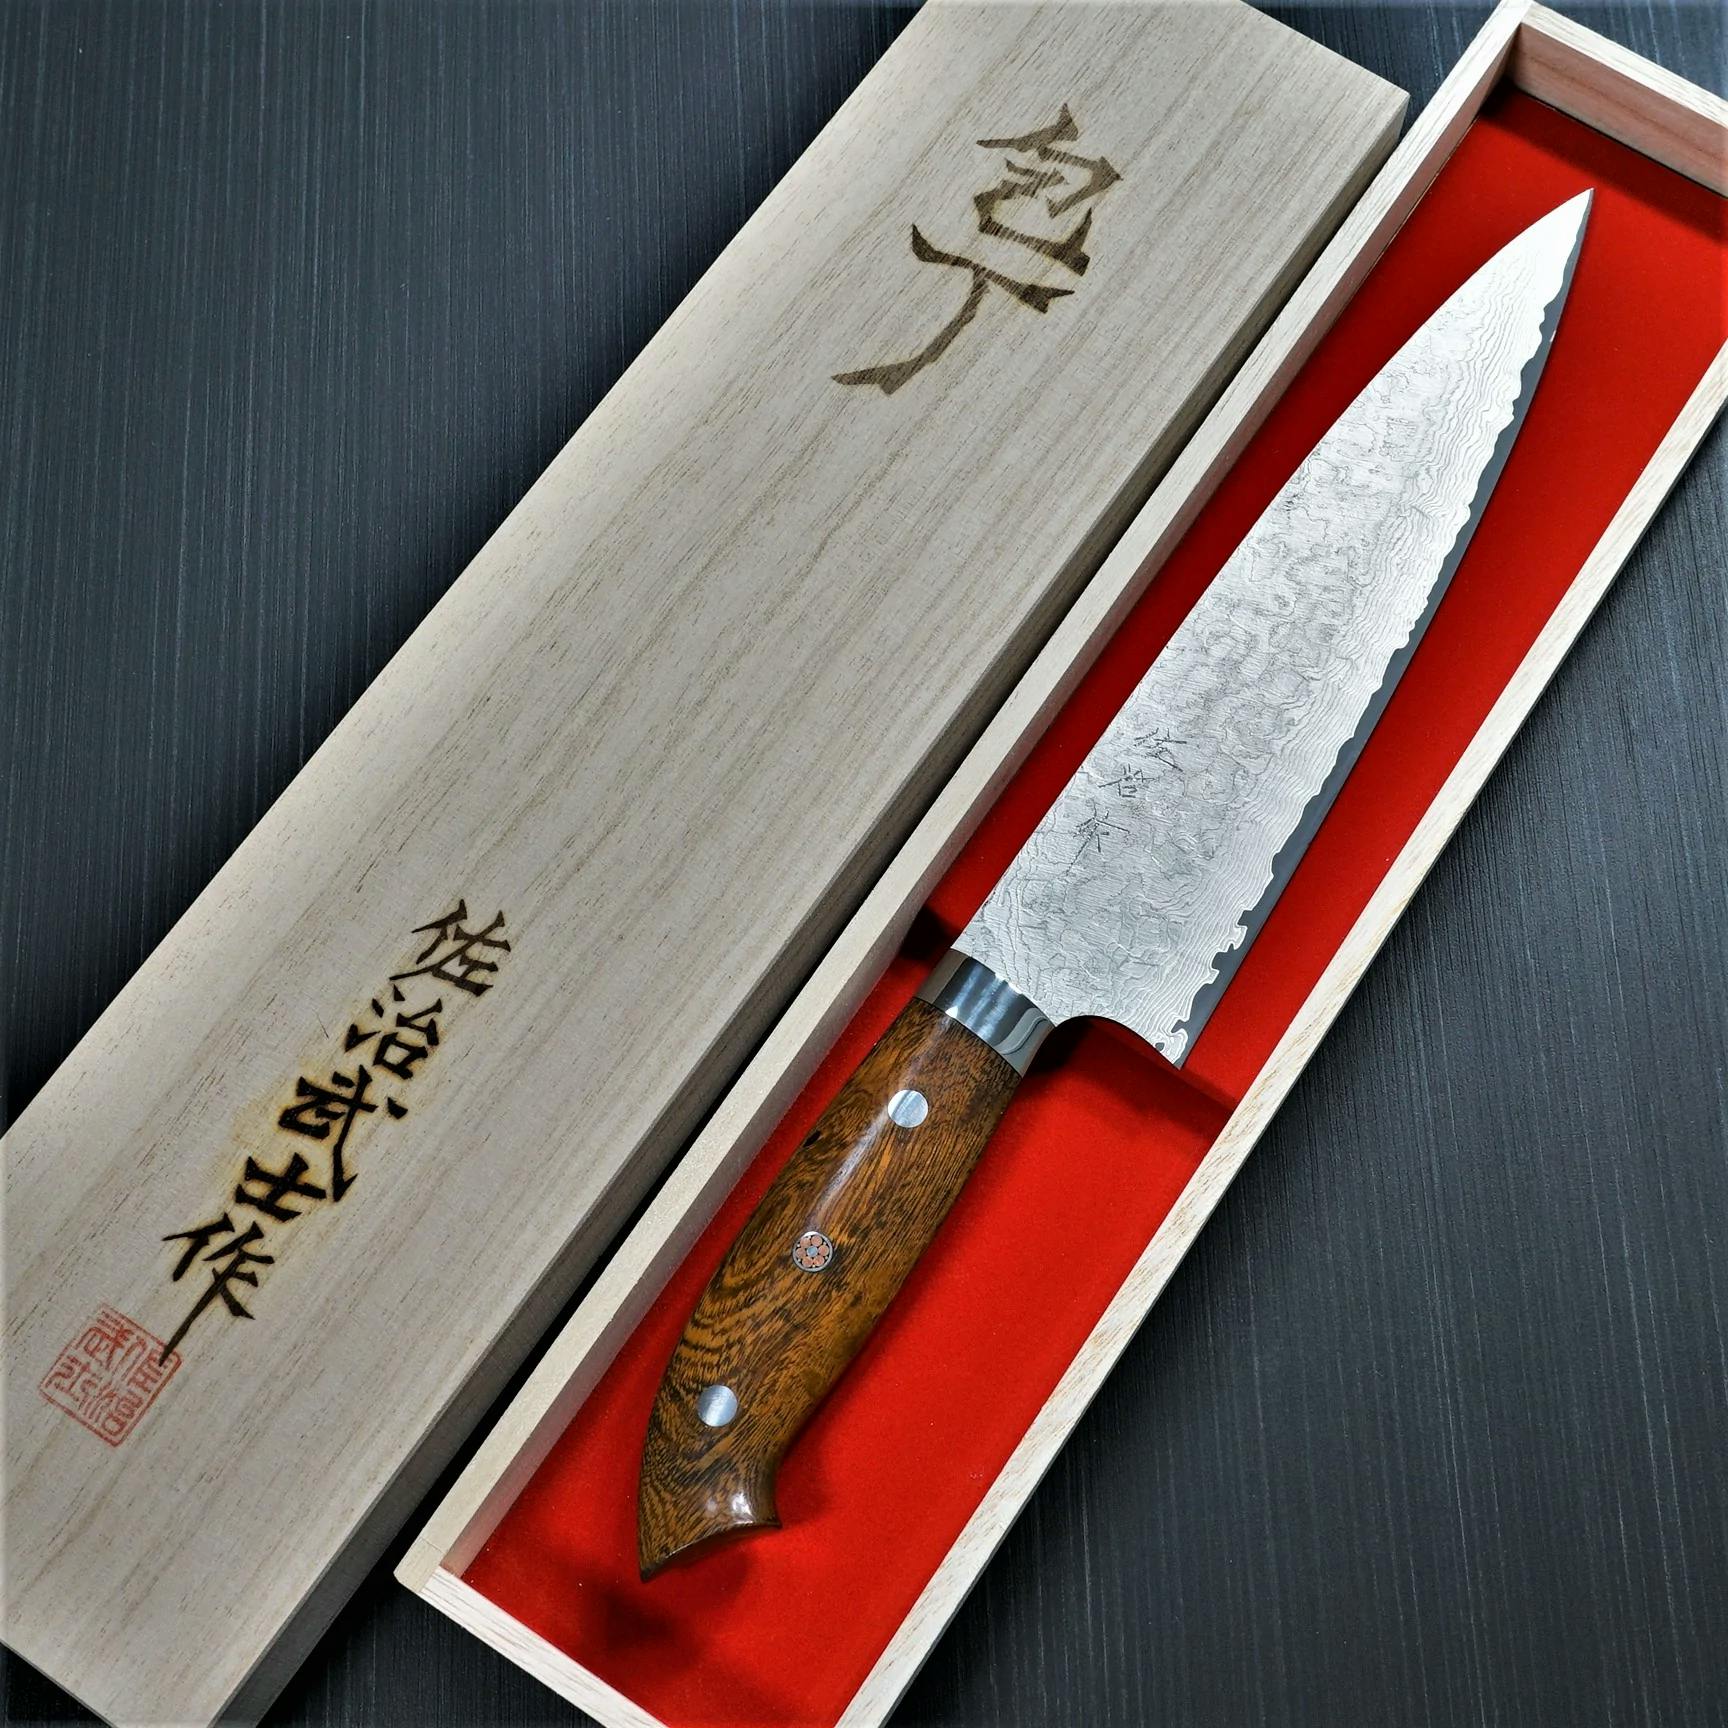 Takeshi Saji logo on a knife.